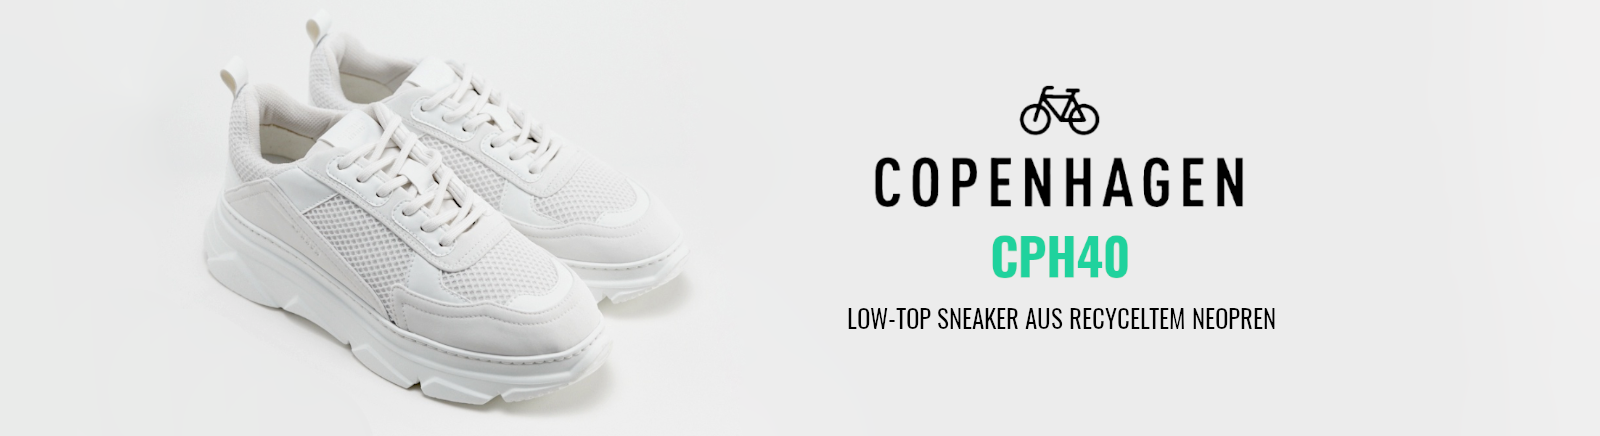 Copenhagen Herrenschuhe online entdecken im Juppen Schuhe Shop